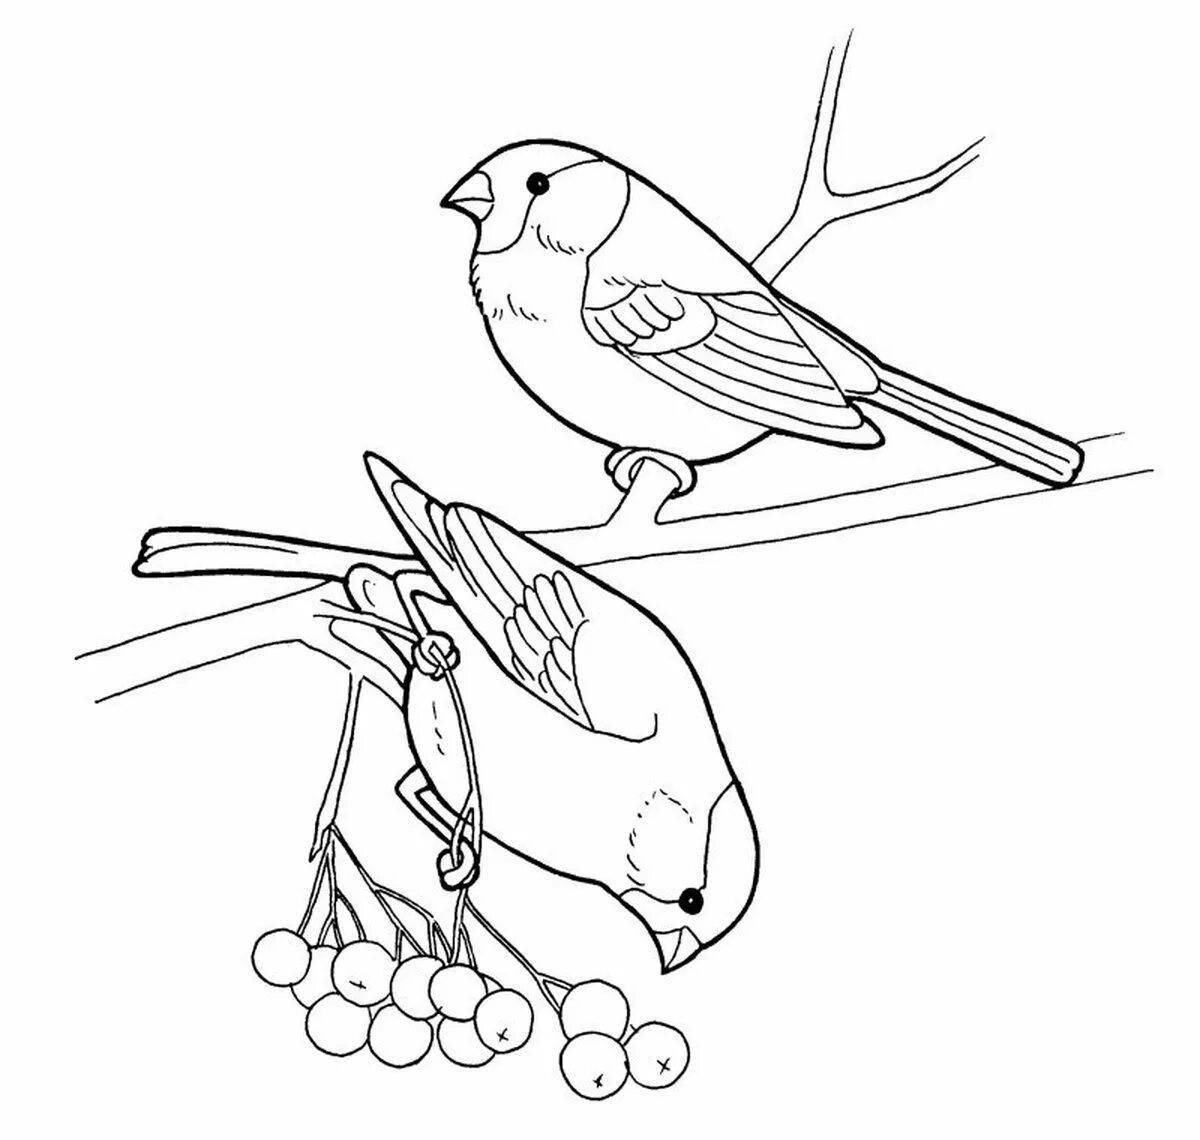 Coloring book sparkling sparrow in winter